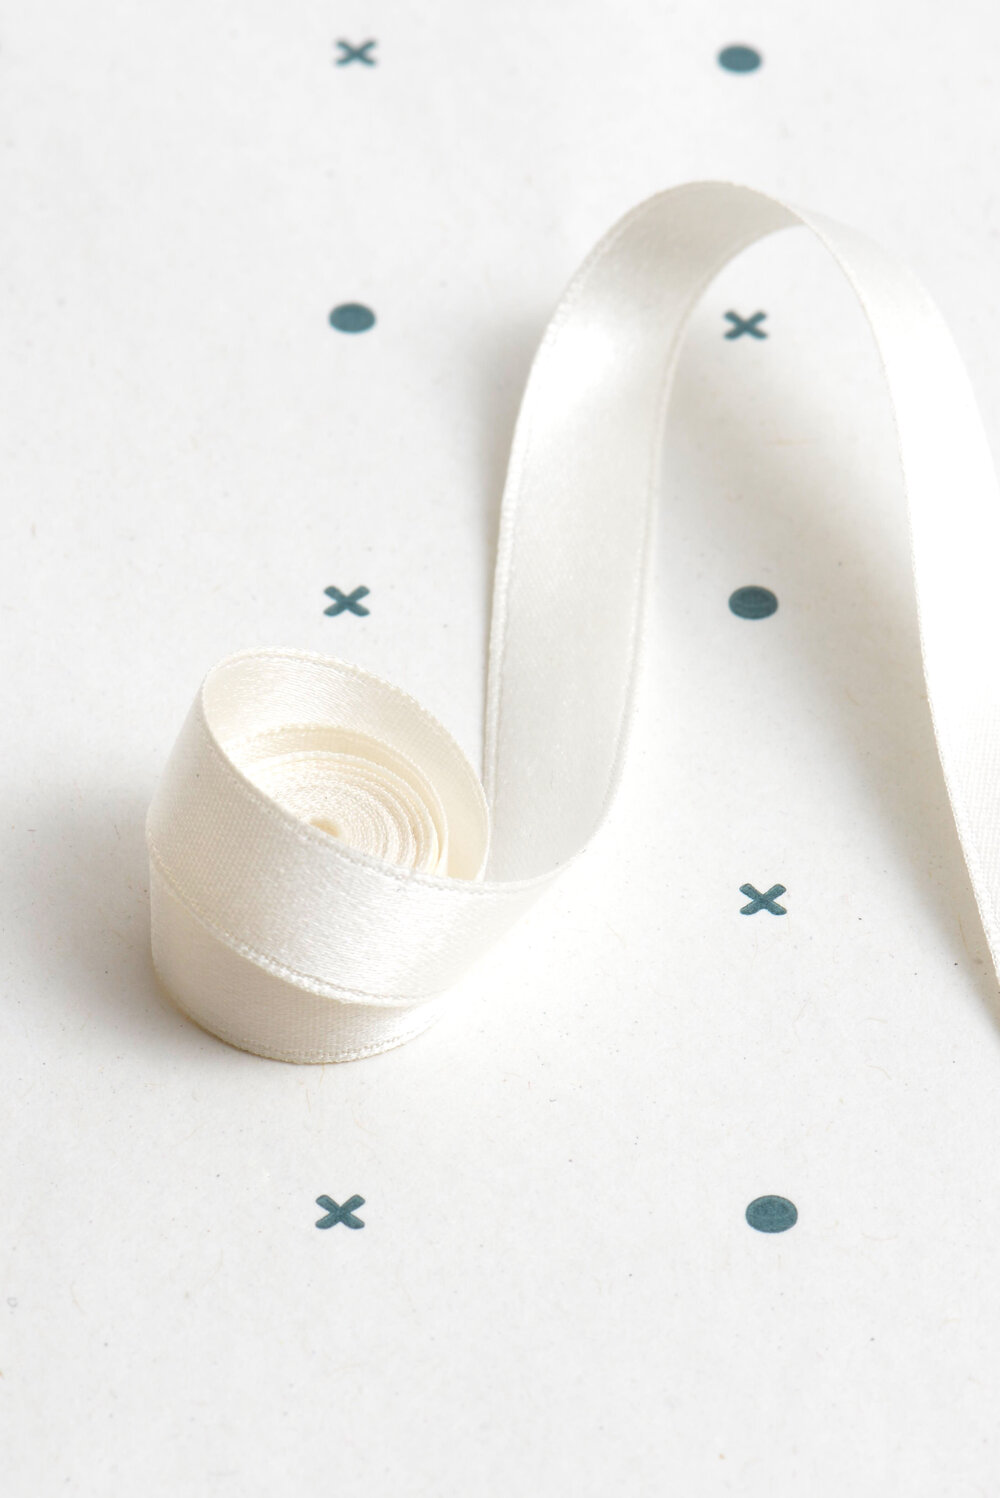 Silk ribbon, natural white, 2 mm wide, soft